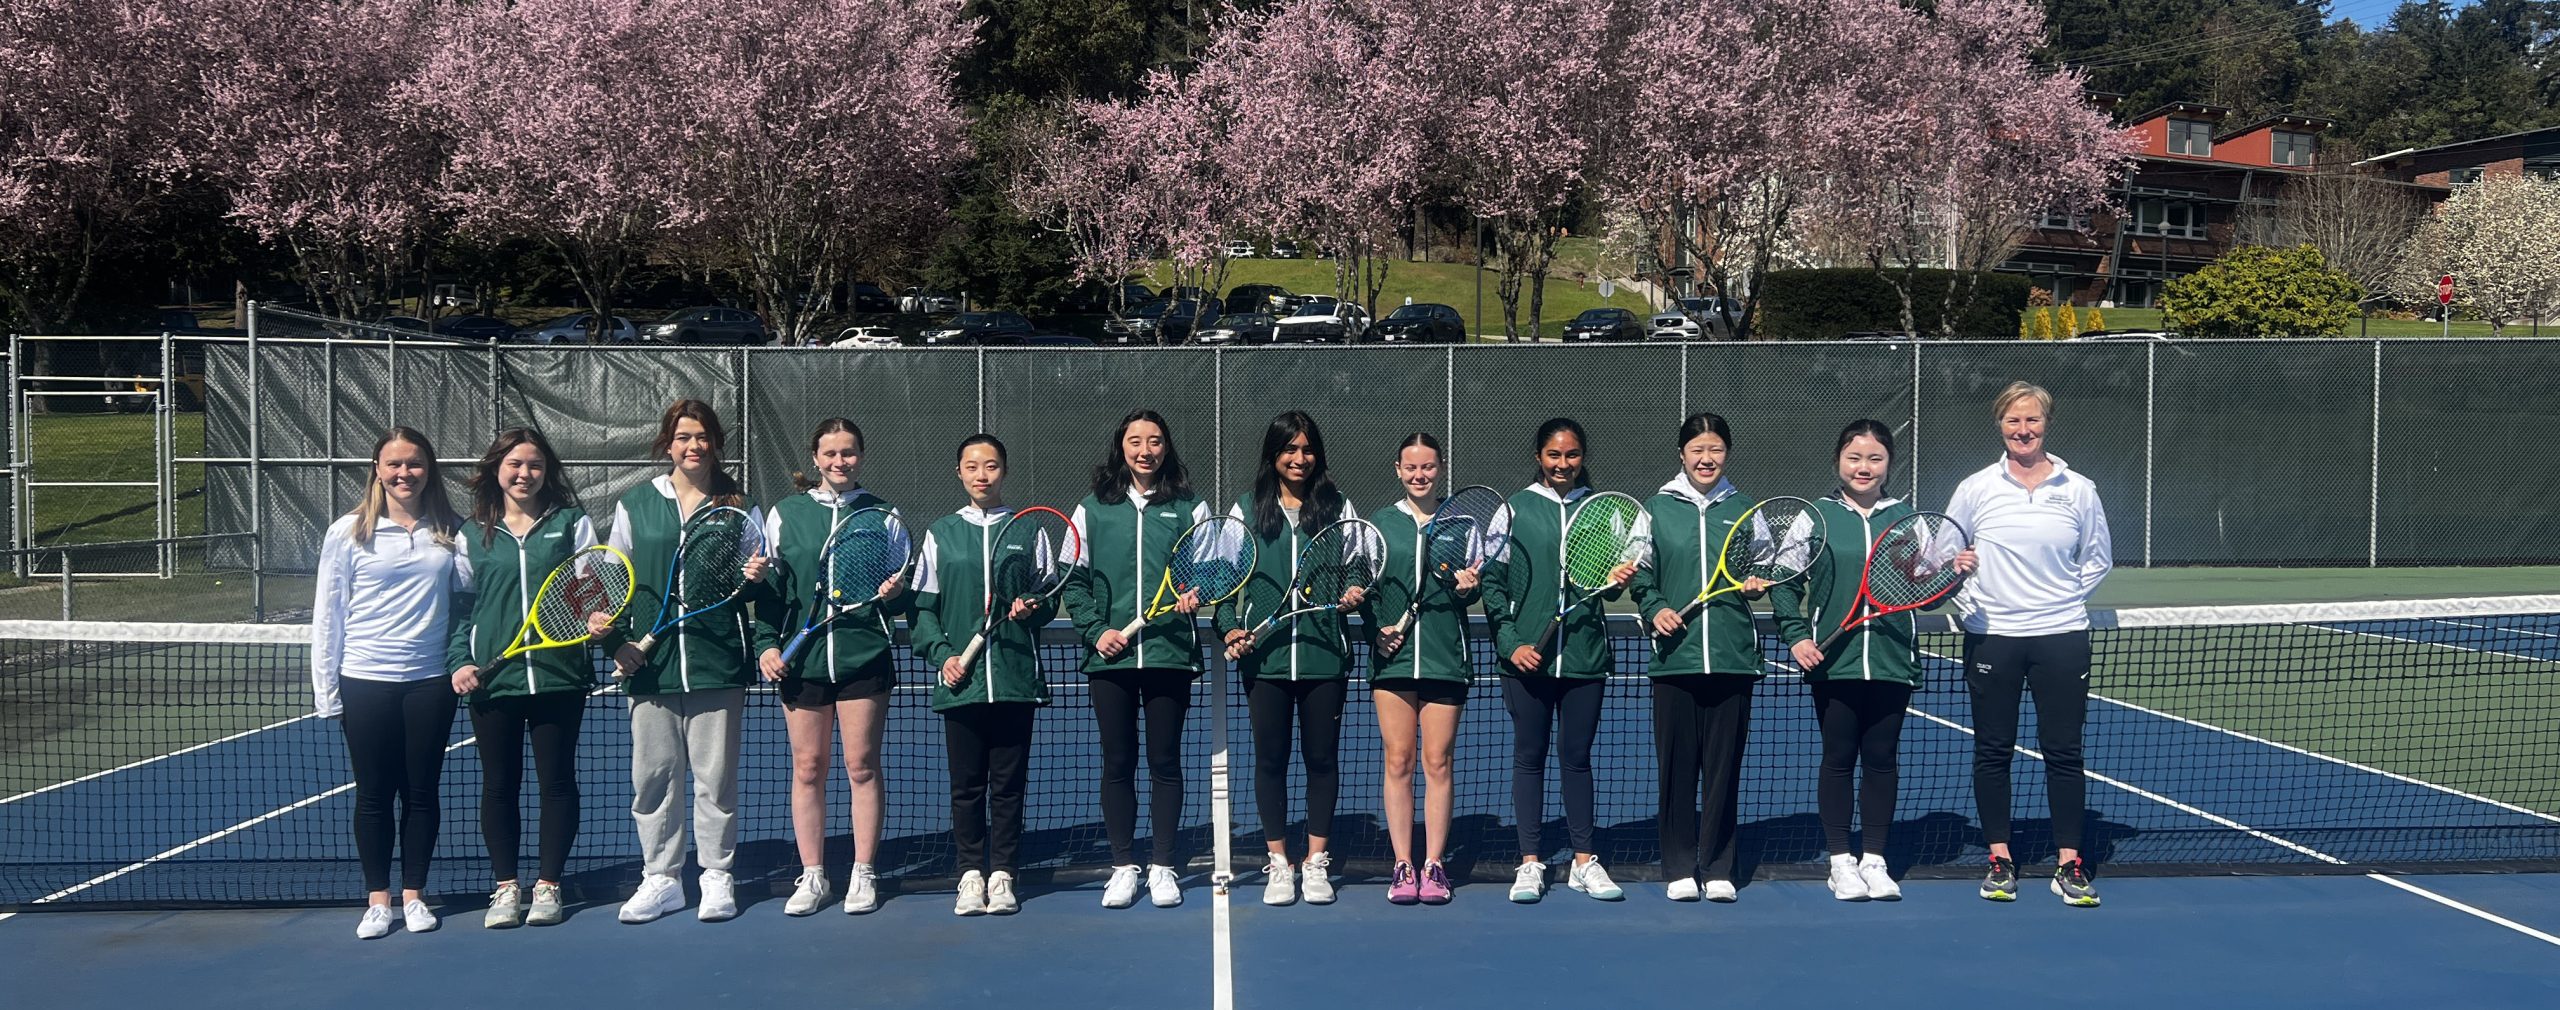 Charles Wright Girls Tennis Team